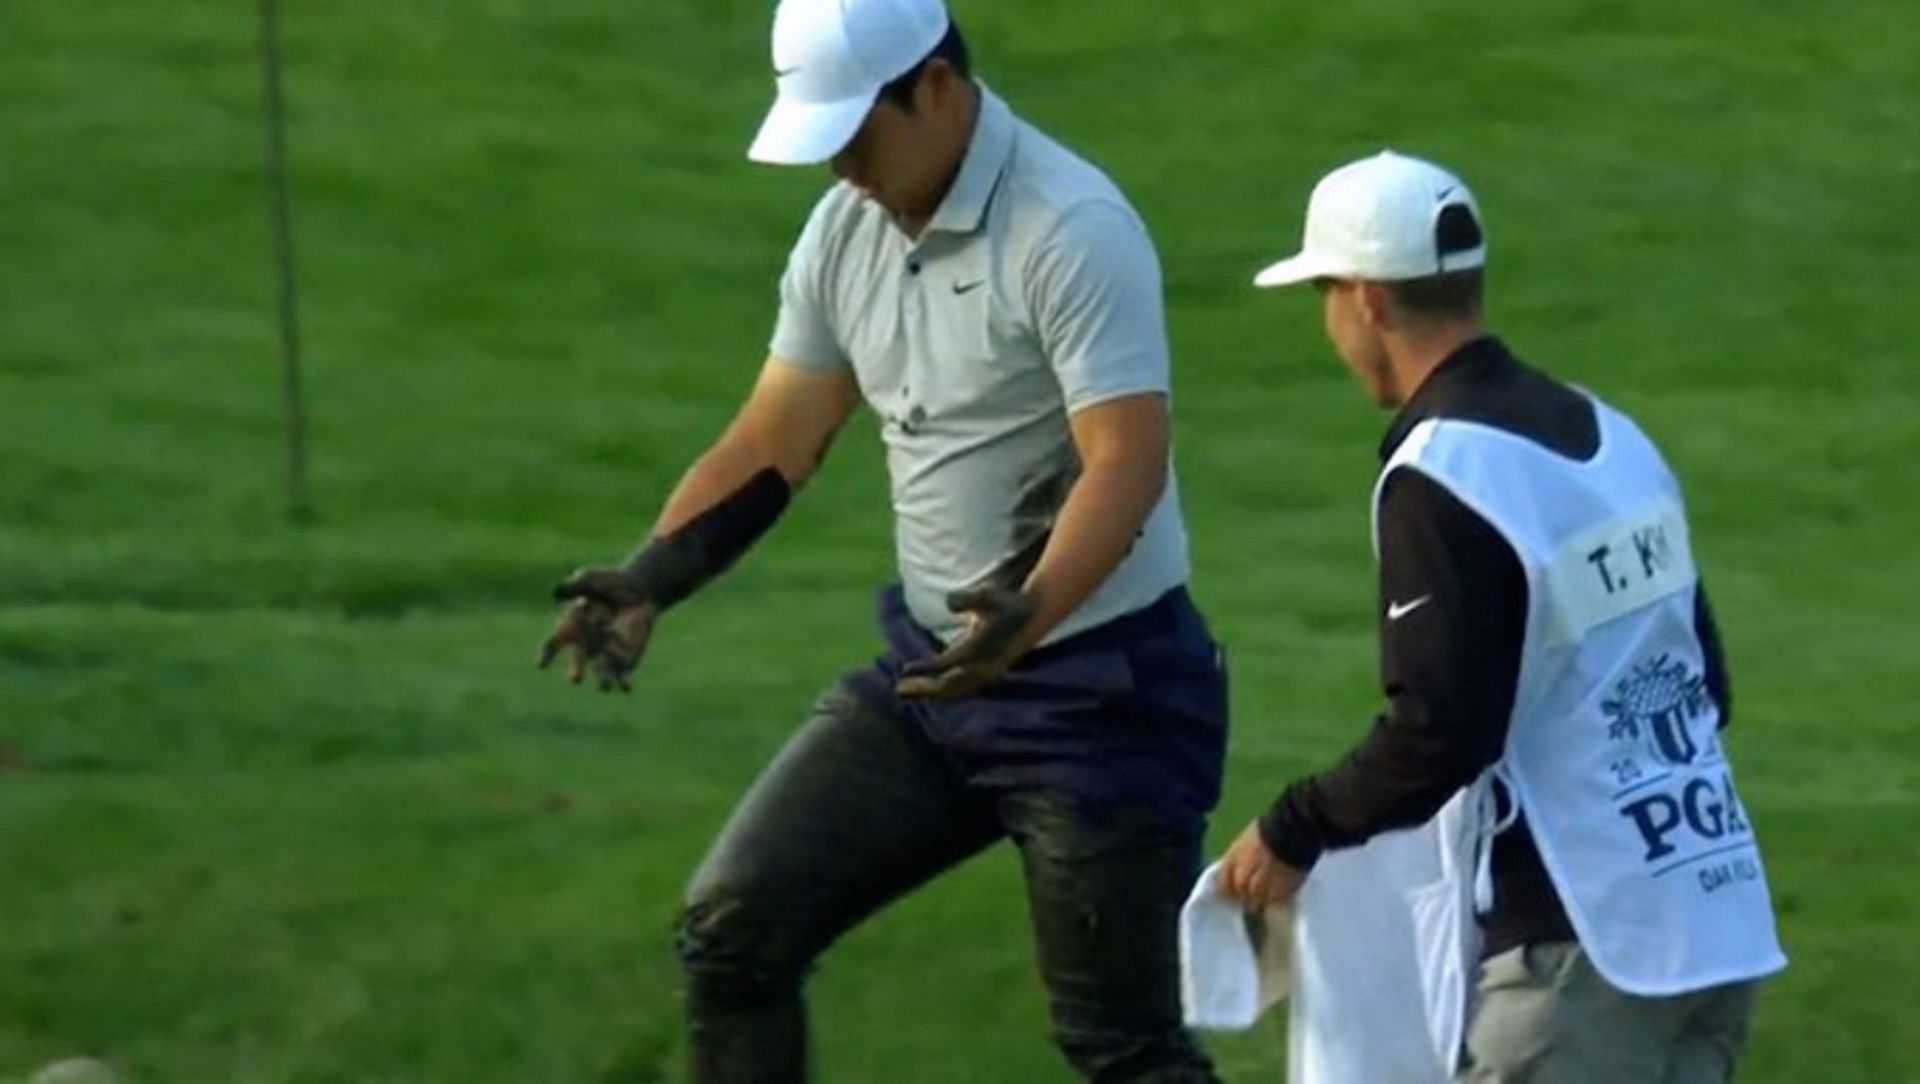 Tom Kim all cover in mud during the major golf tournament 2023 PGA Championship (Image via Twitter @TMZ_Sports).